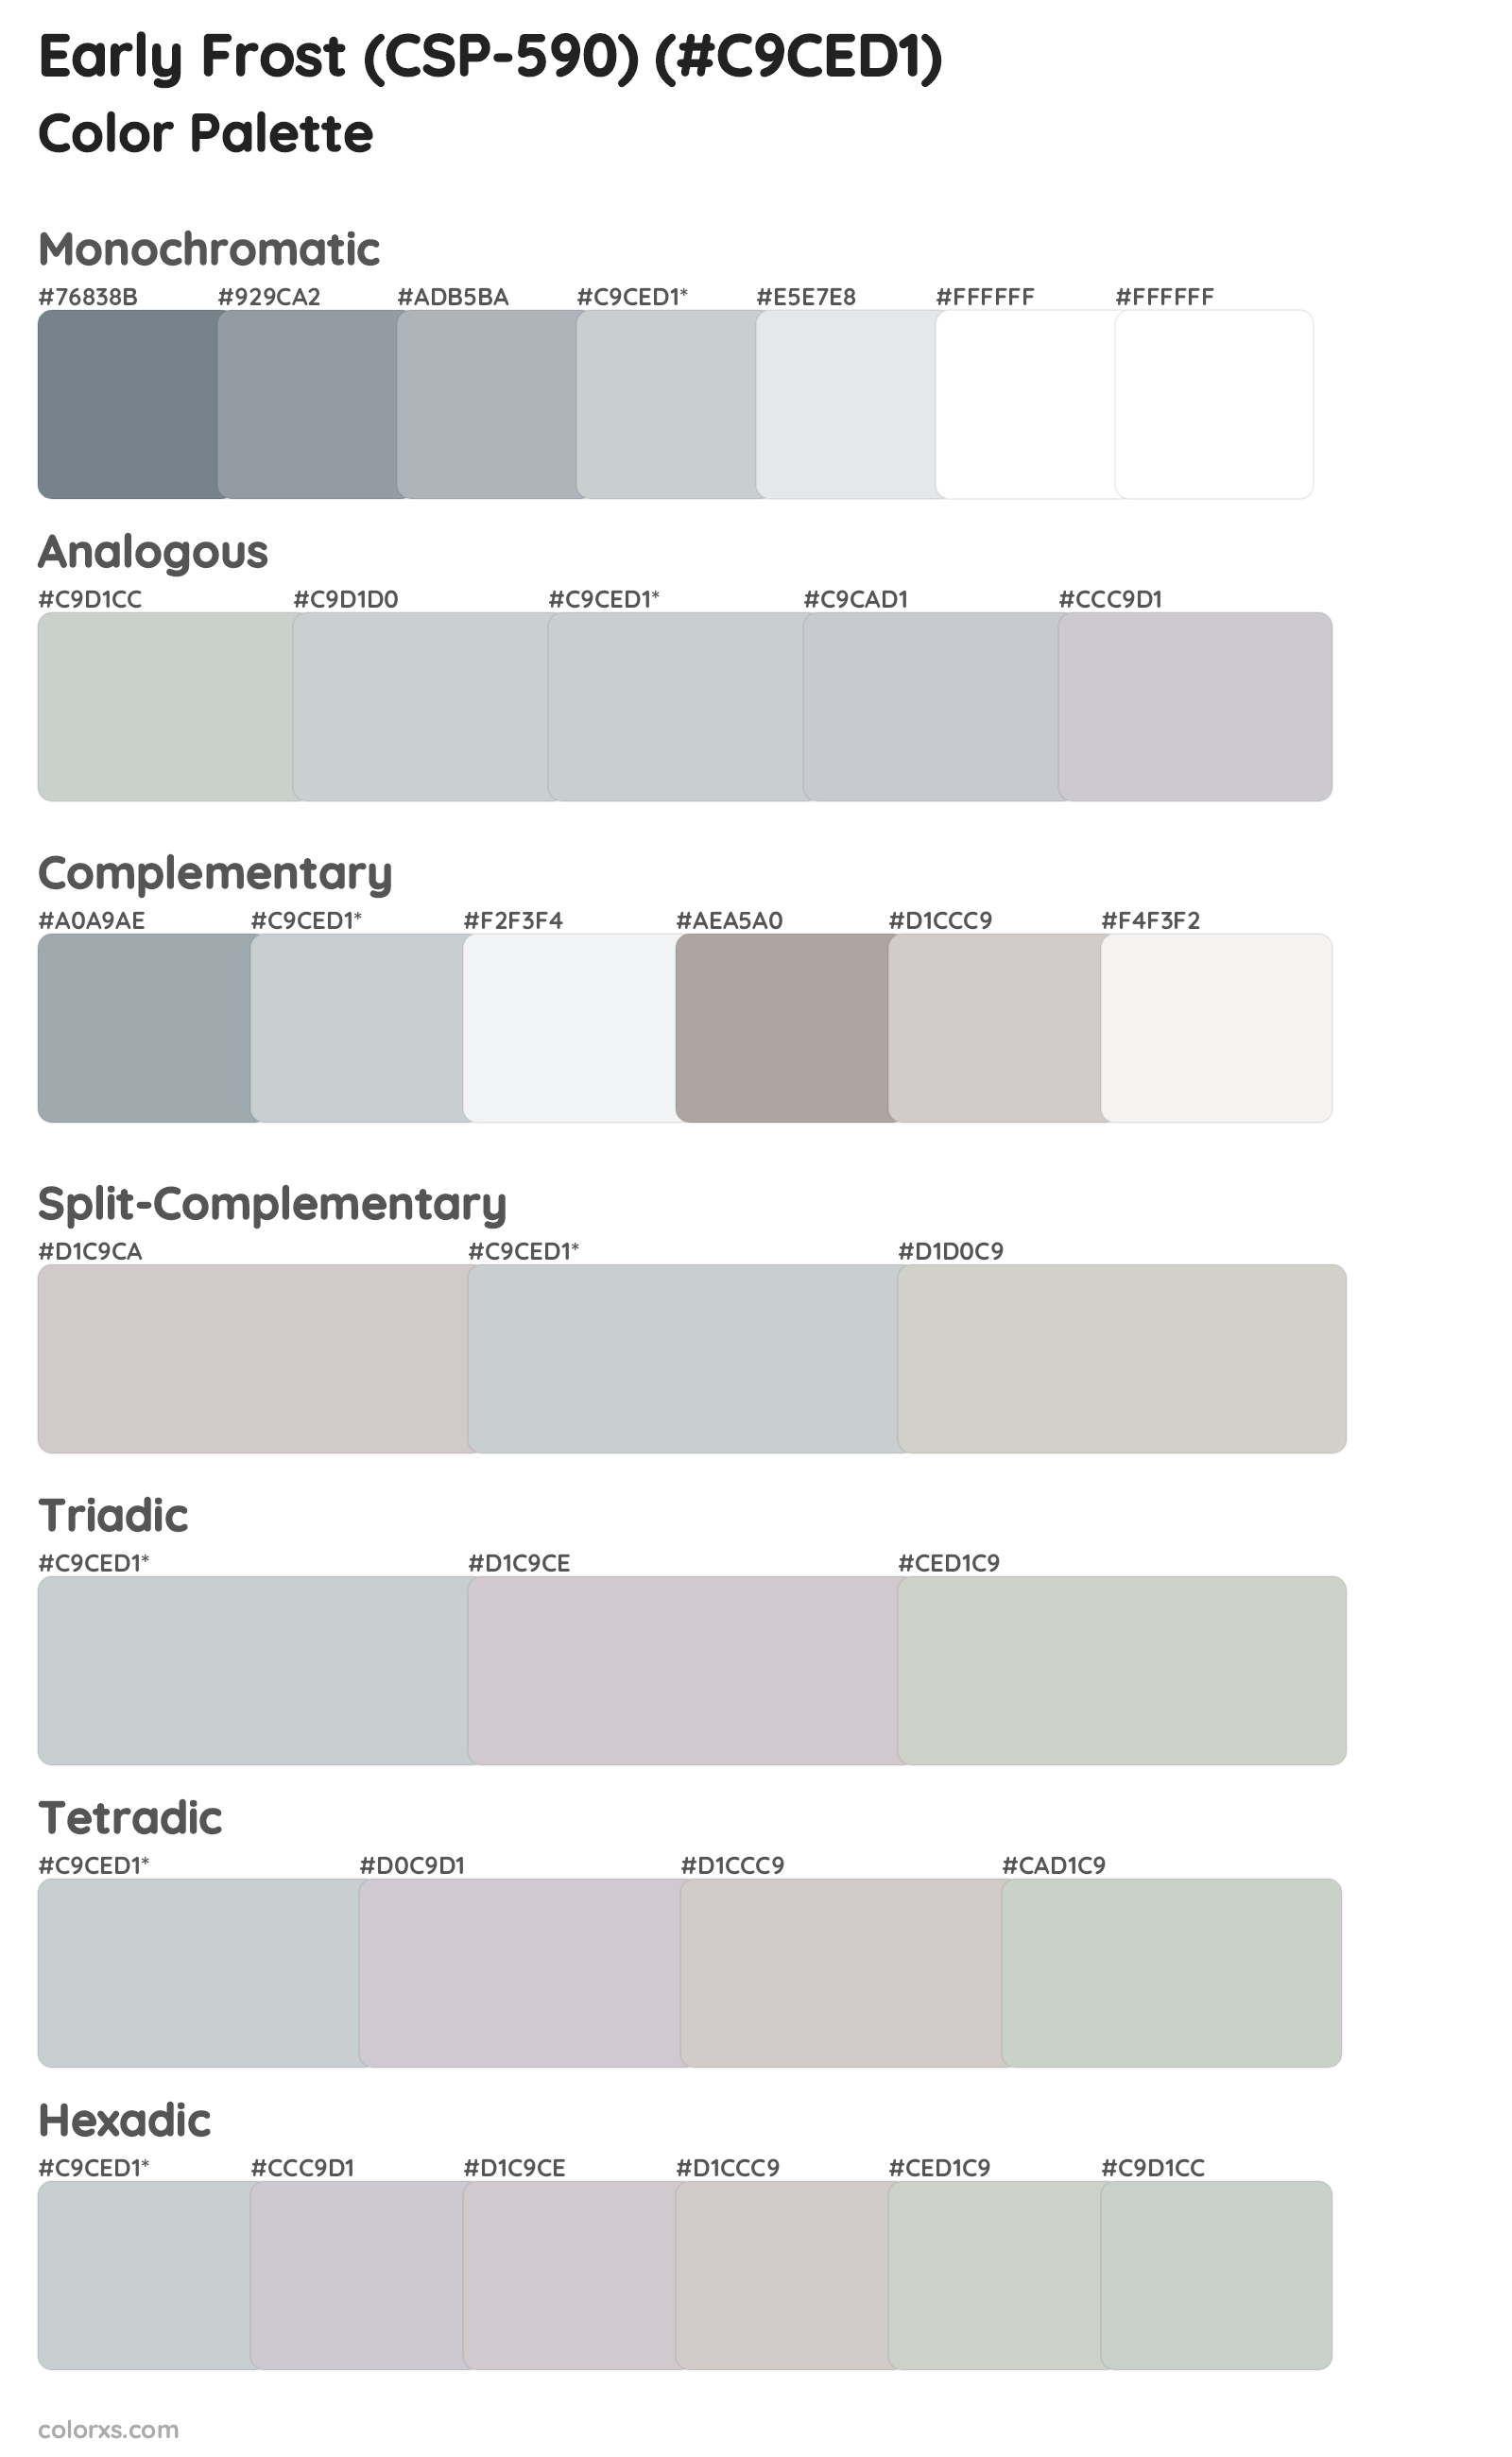 Early Frost (CSP-590) Color Scheme Palettes